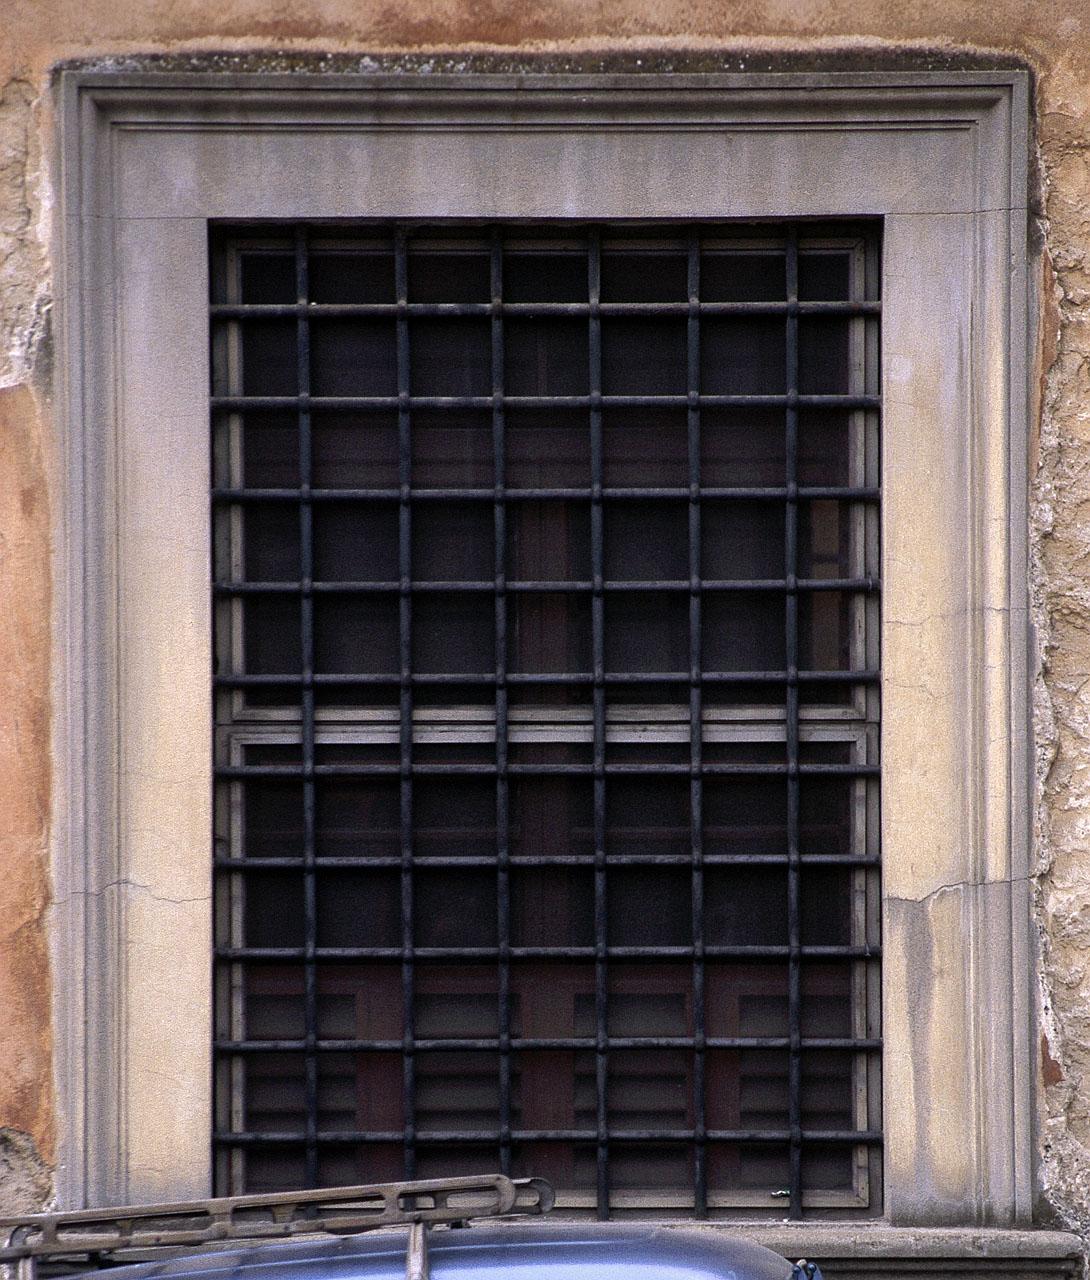 mostra di finestra - produzione fiorentina (sec. XV)